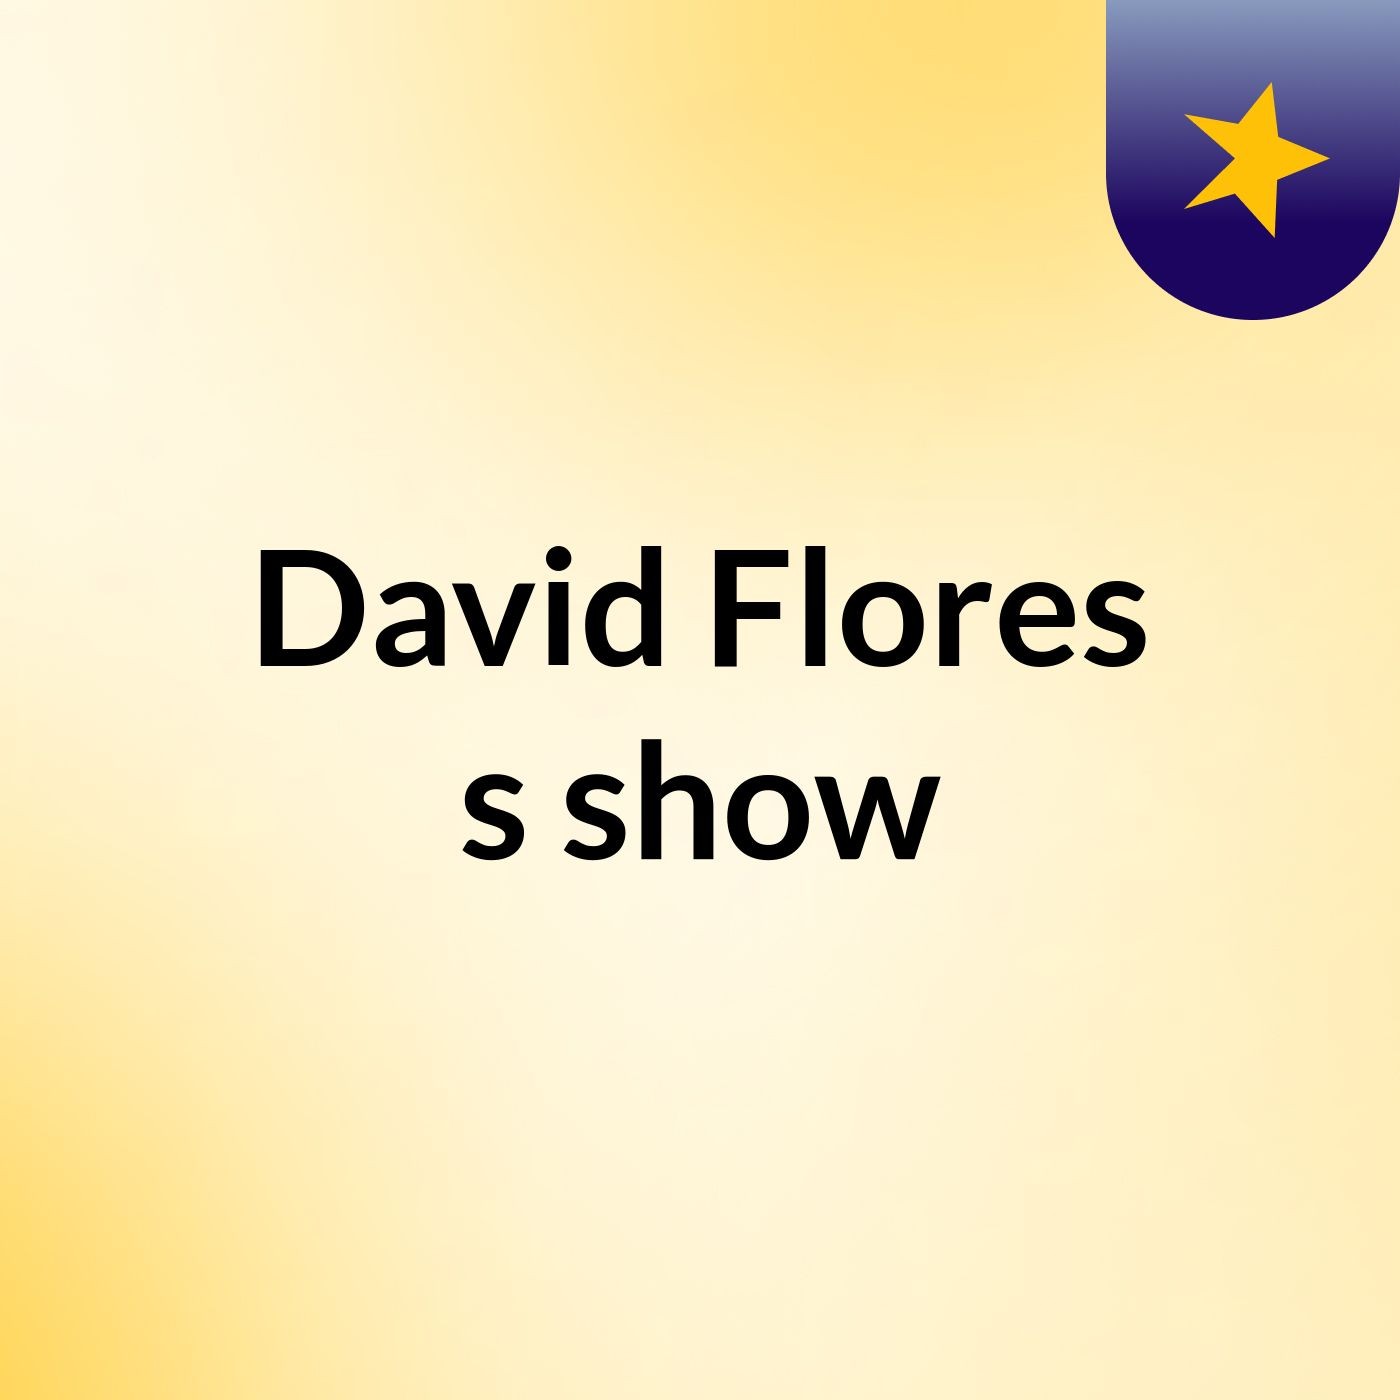 David Flores's show